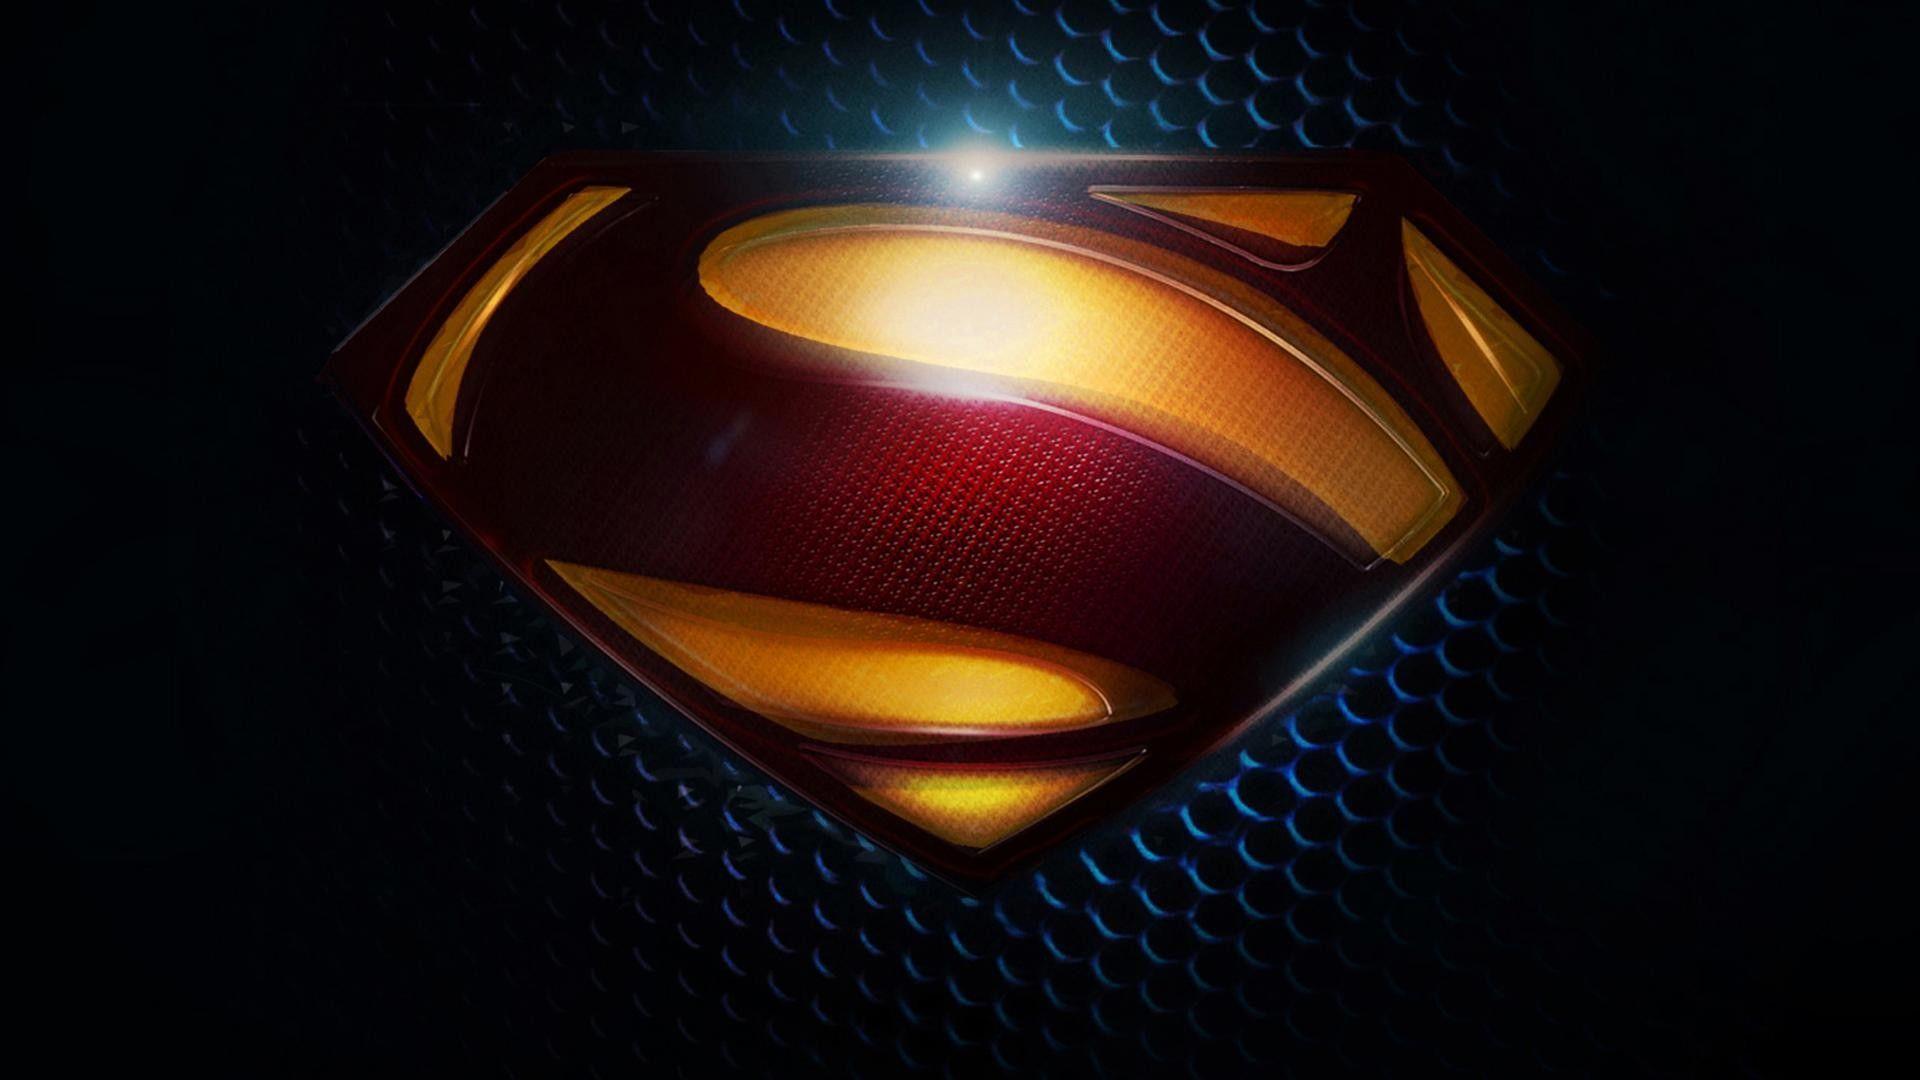 Dark Superman Logo - Superman Logo wallpaper ·① Download free amazing High Resolution ...